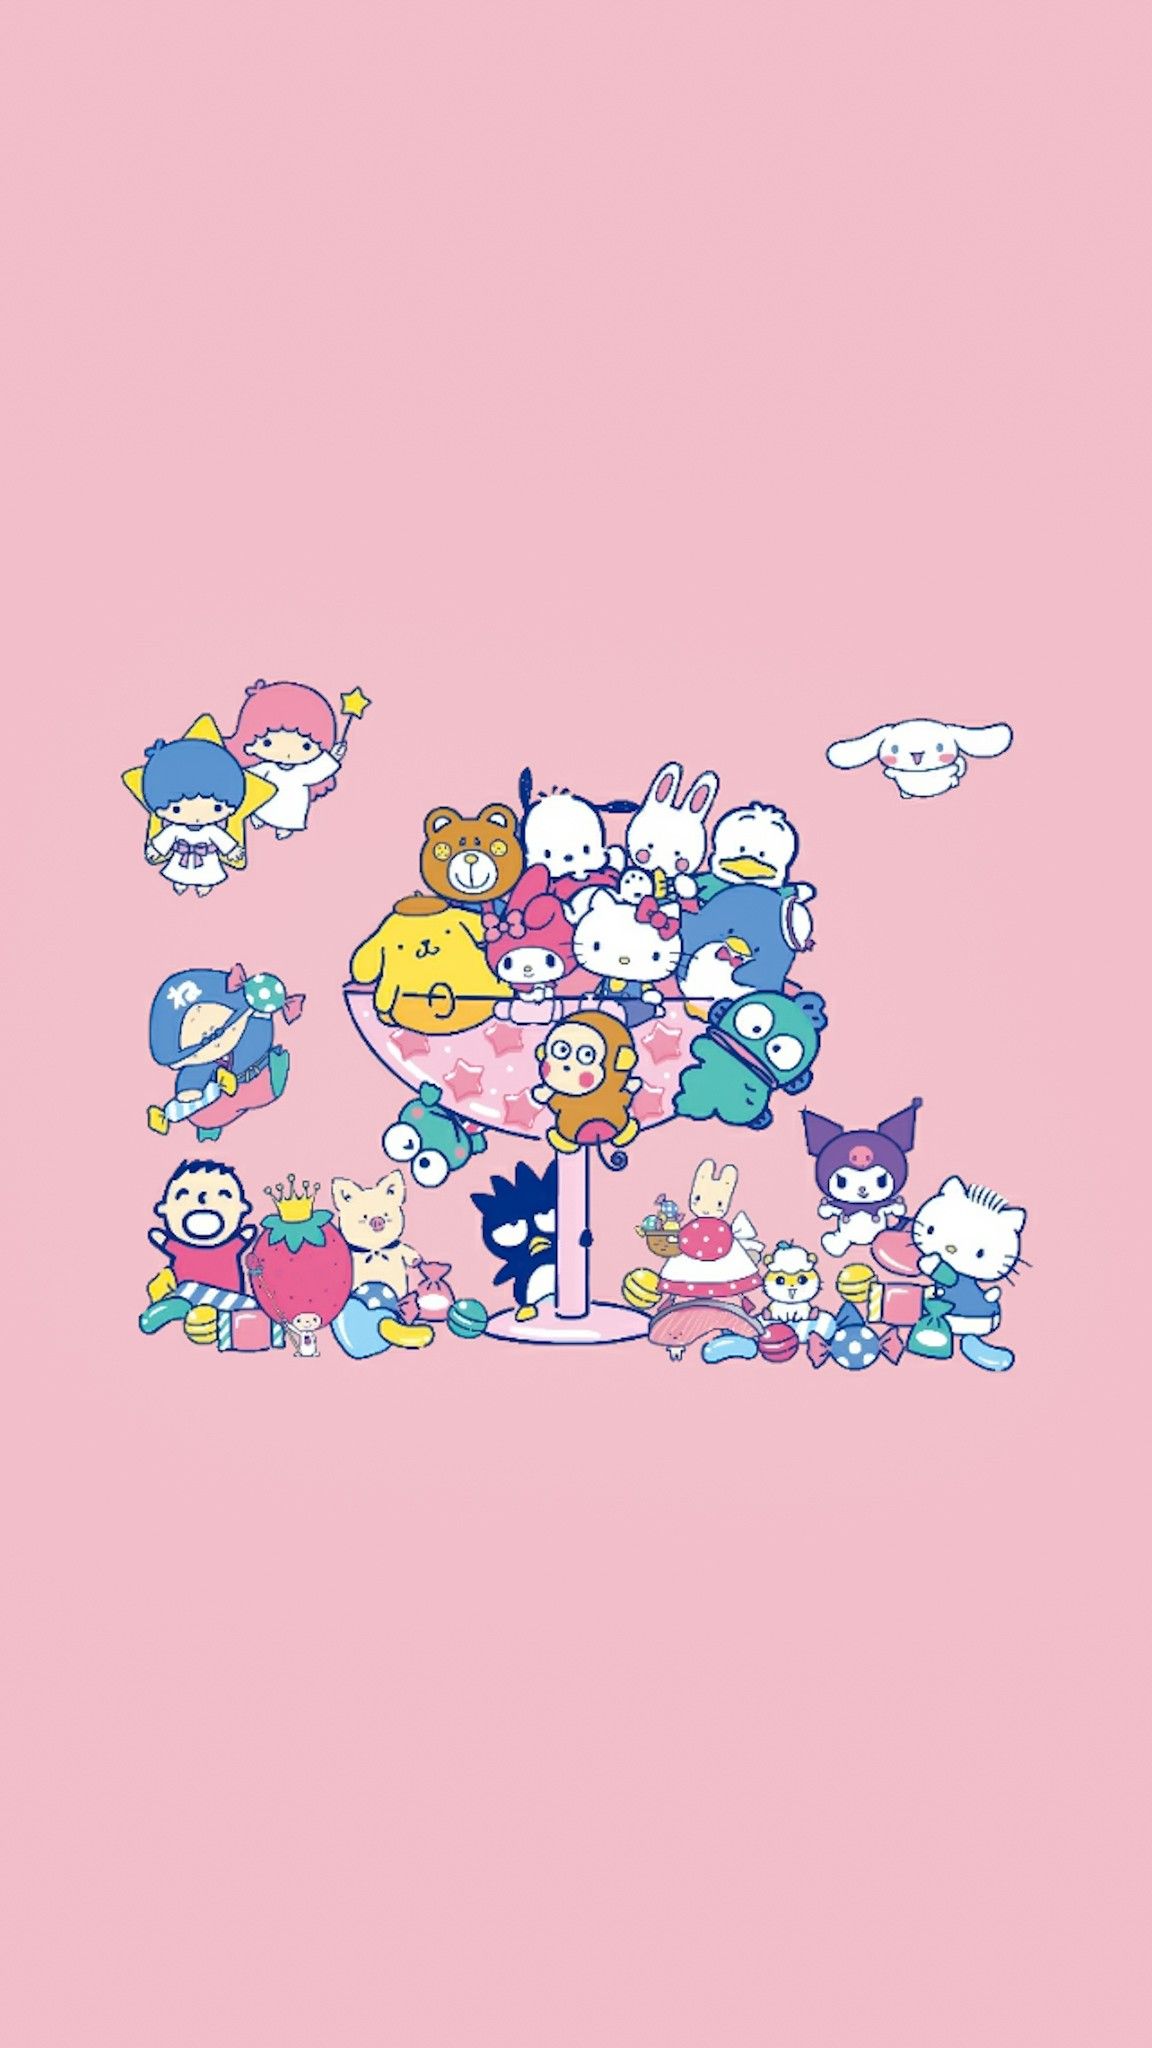 Live Wallpaper HD on Twitter Free Download Hello Kitty Characters  Wallpaper HD httpstcoeFDHv46TLV httpstcozhT9TlV0D6  Twitter